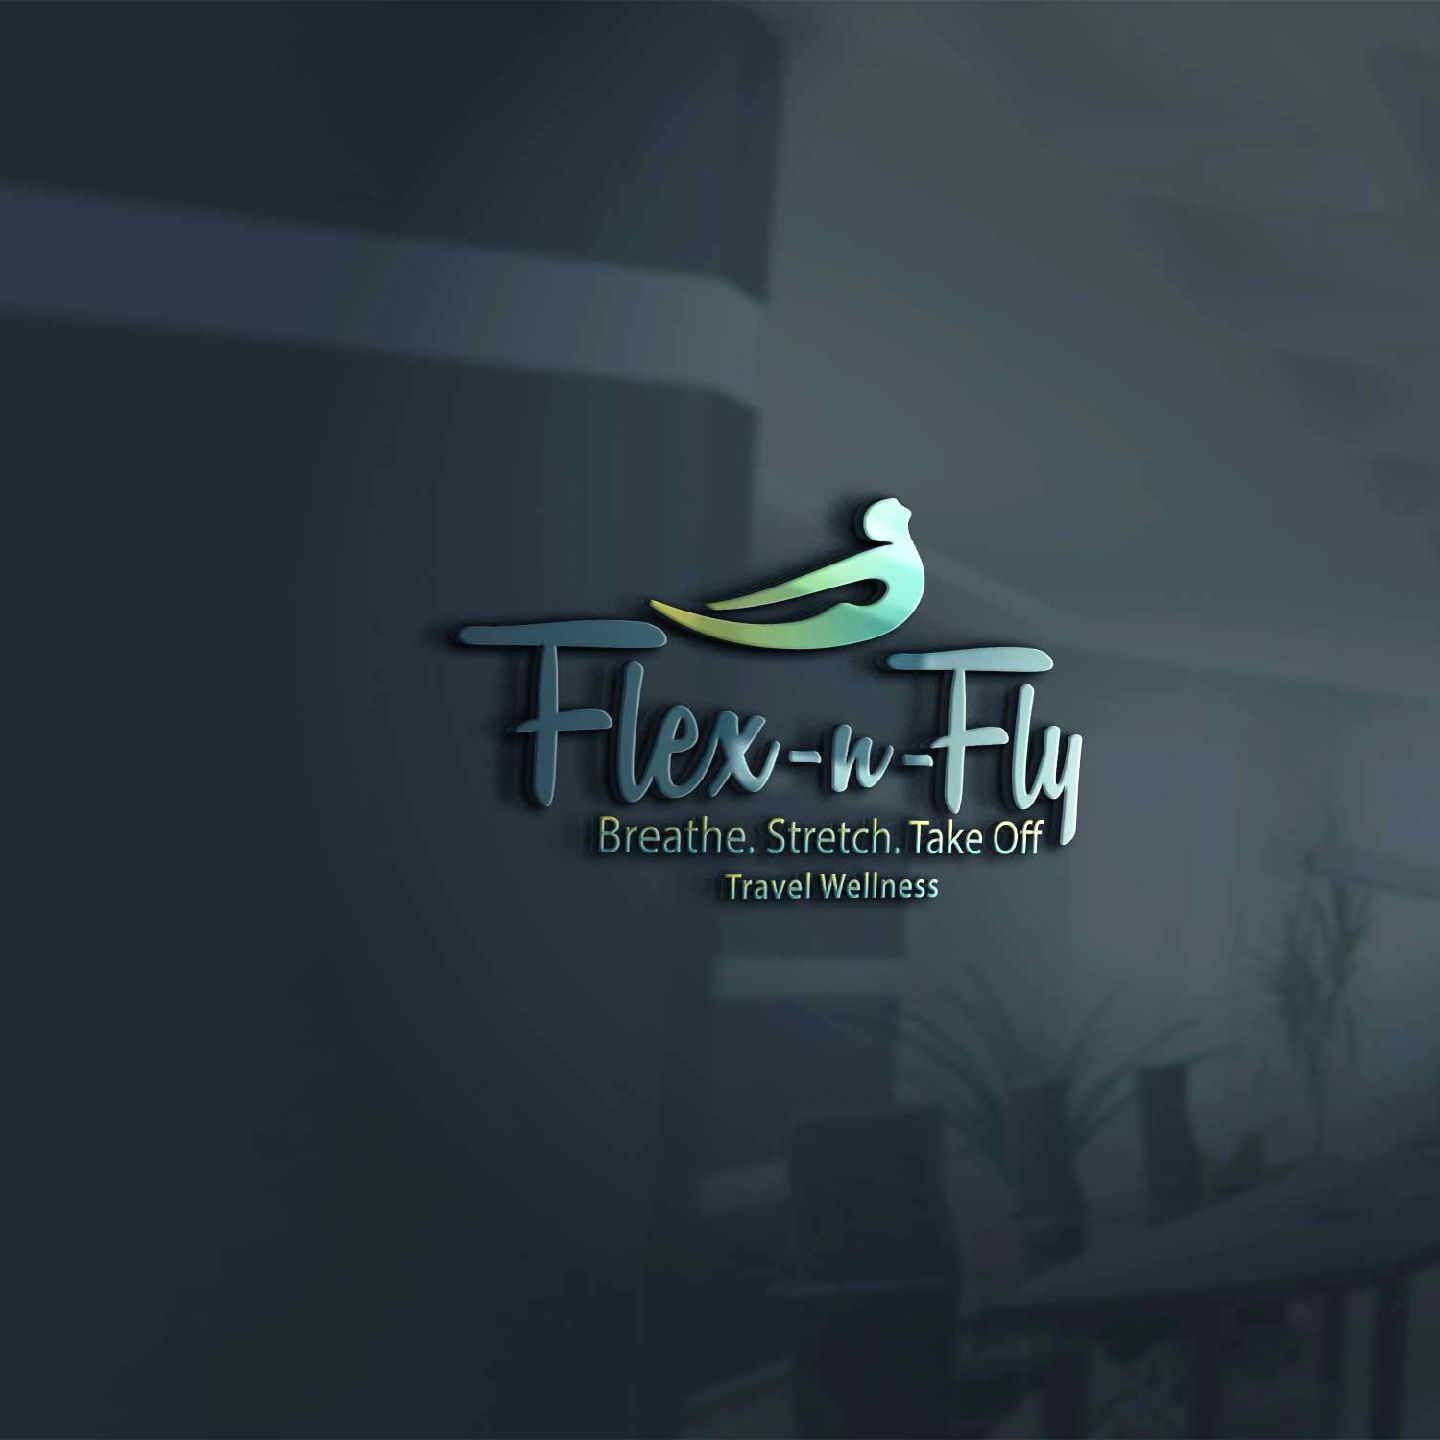 Flexnfly's images